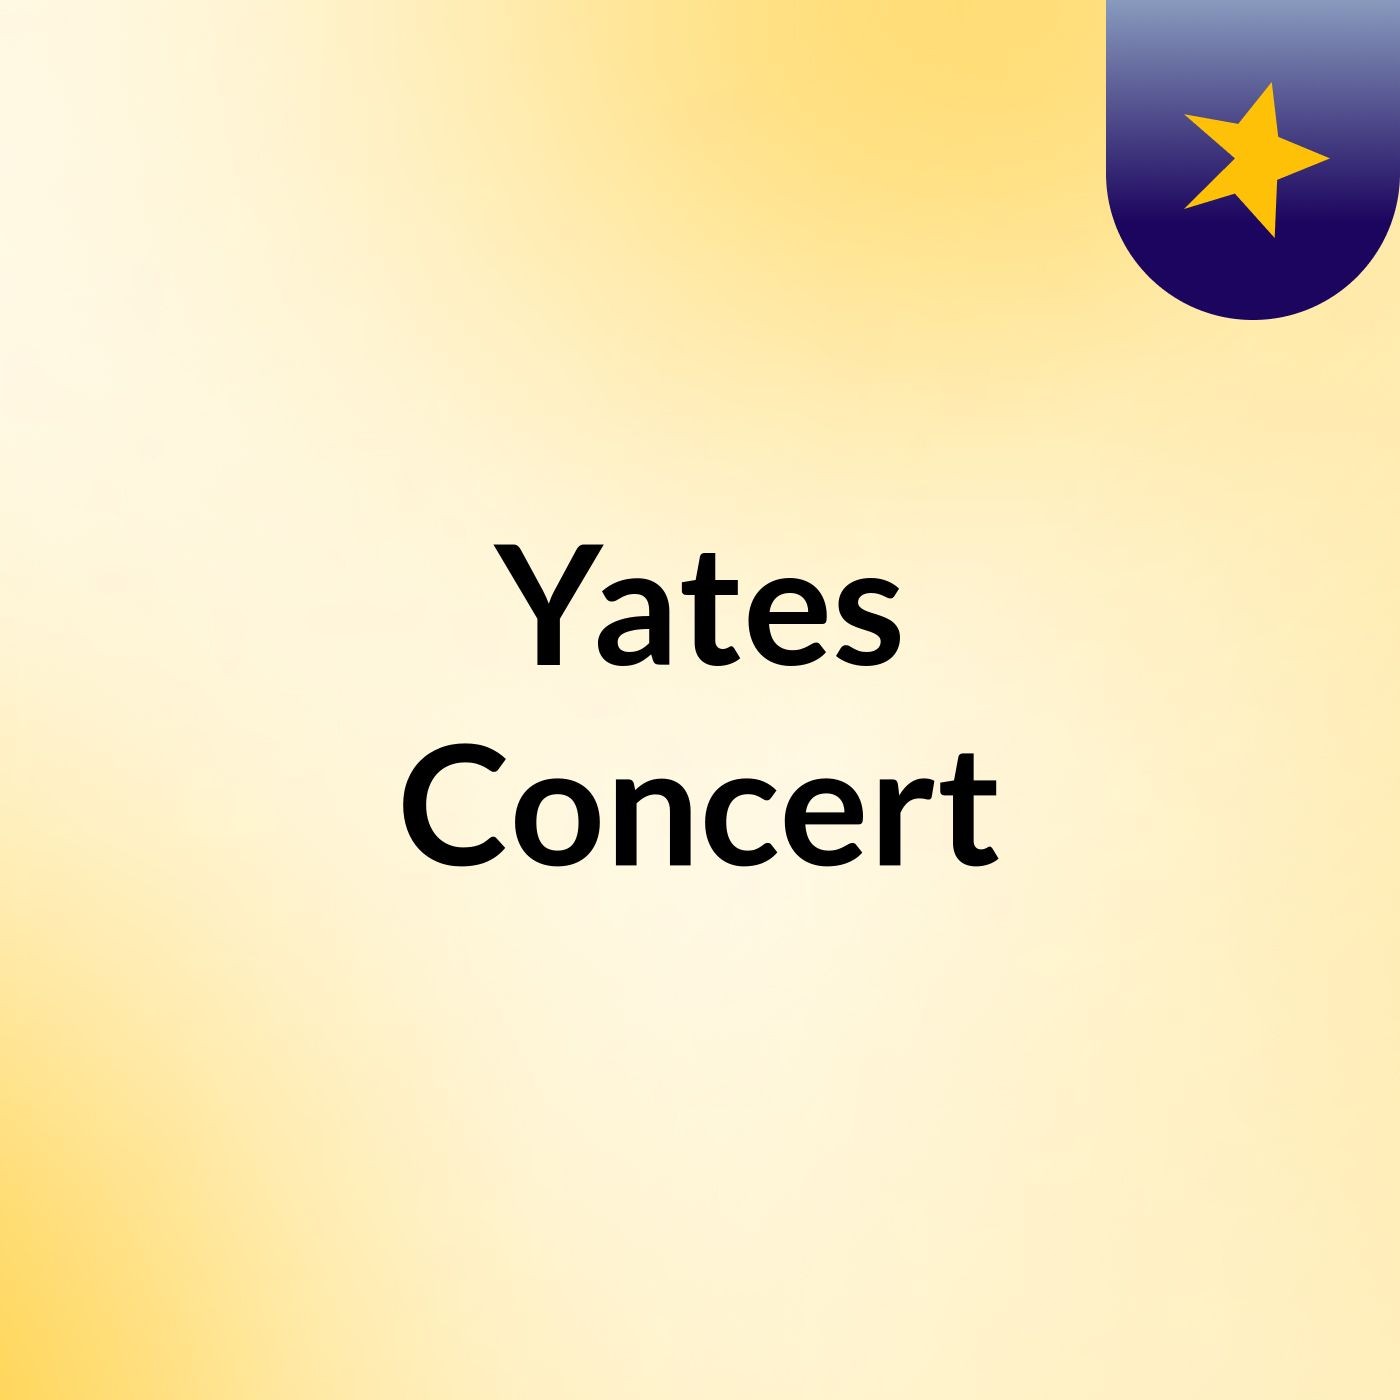 Yates Concert